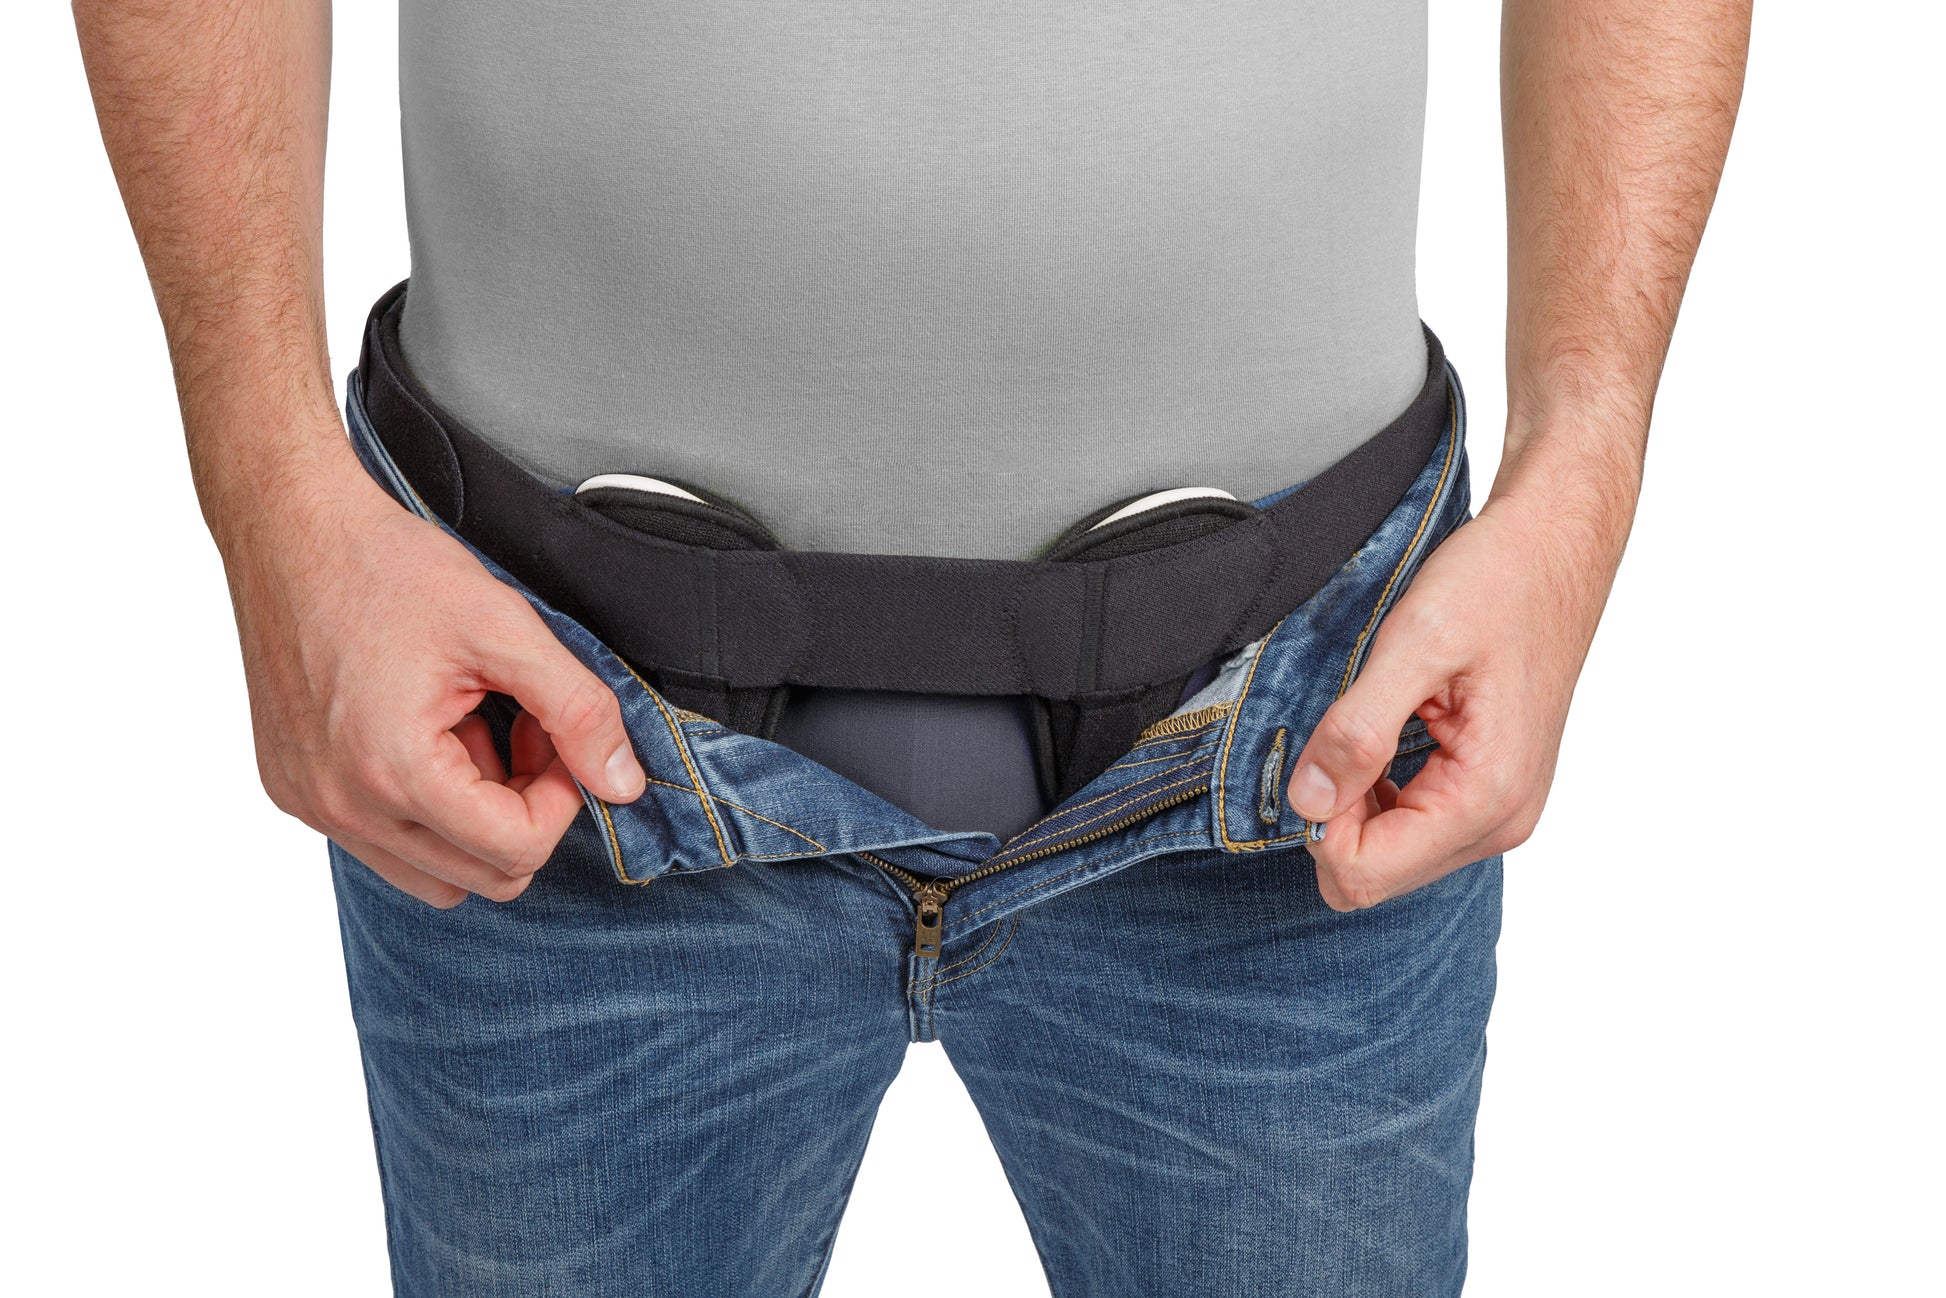 Mövibrace Abdominal Belt for Hanging Belly, Weak Abdominal and Lower B –  mövibrace